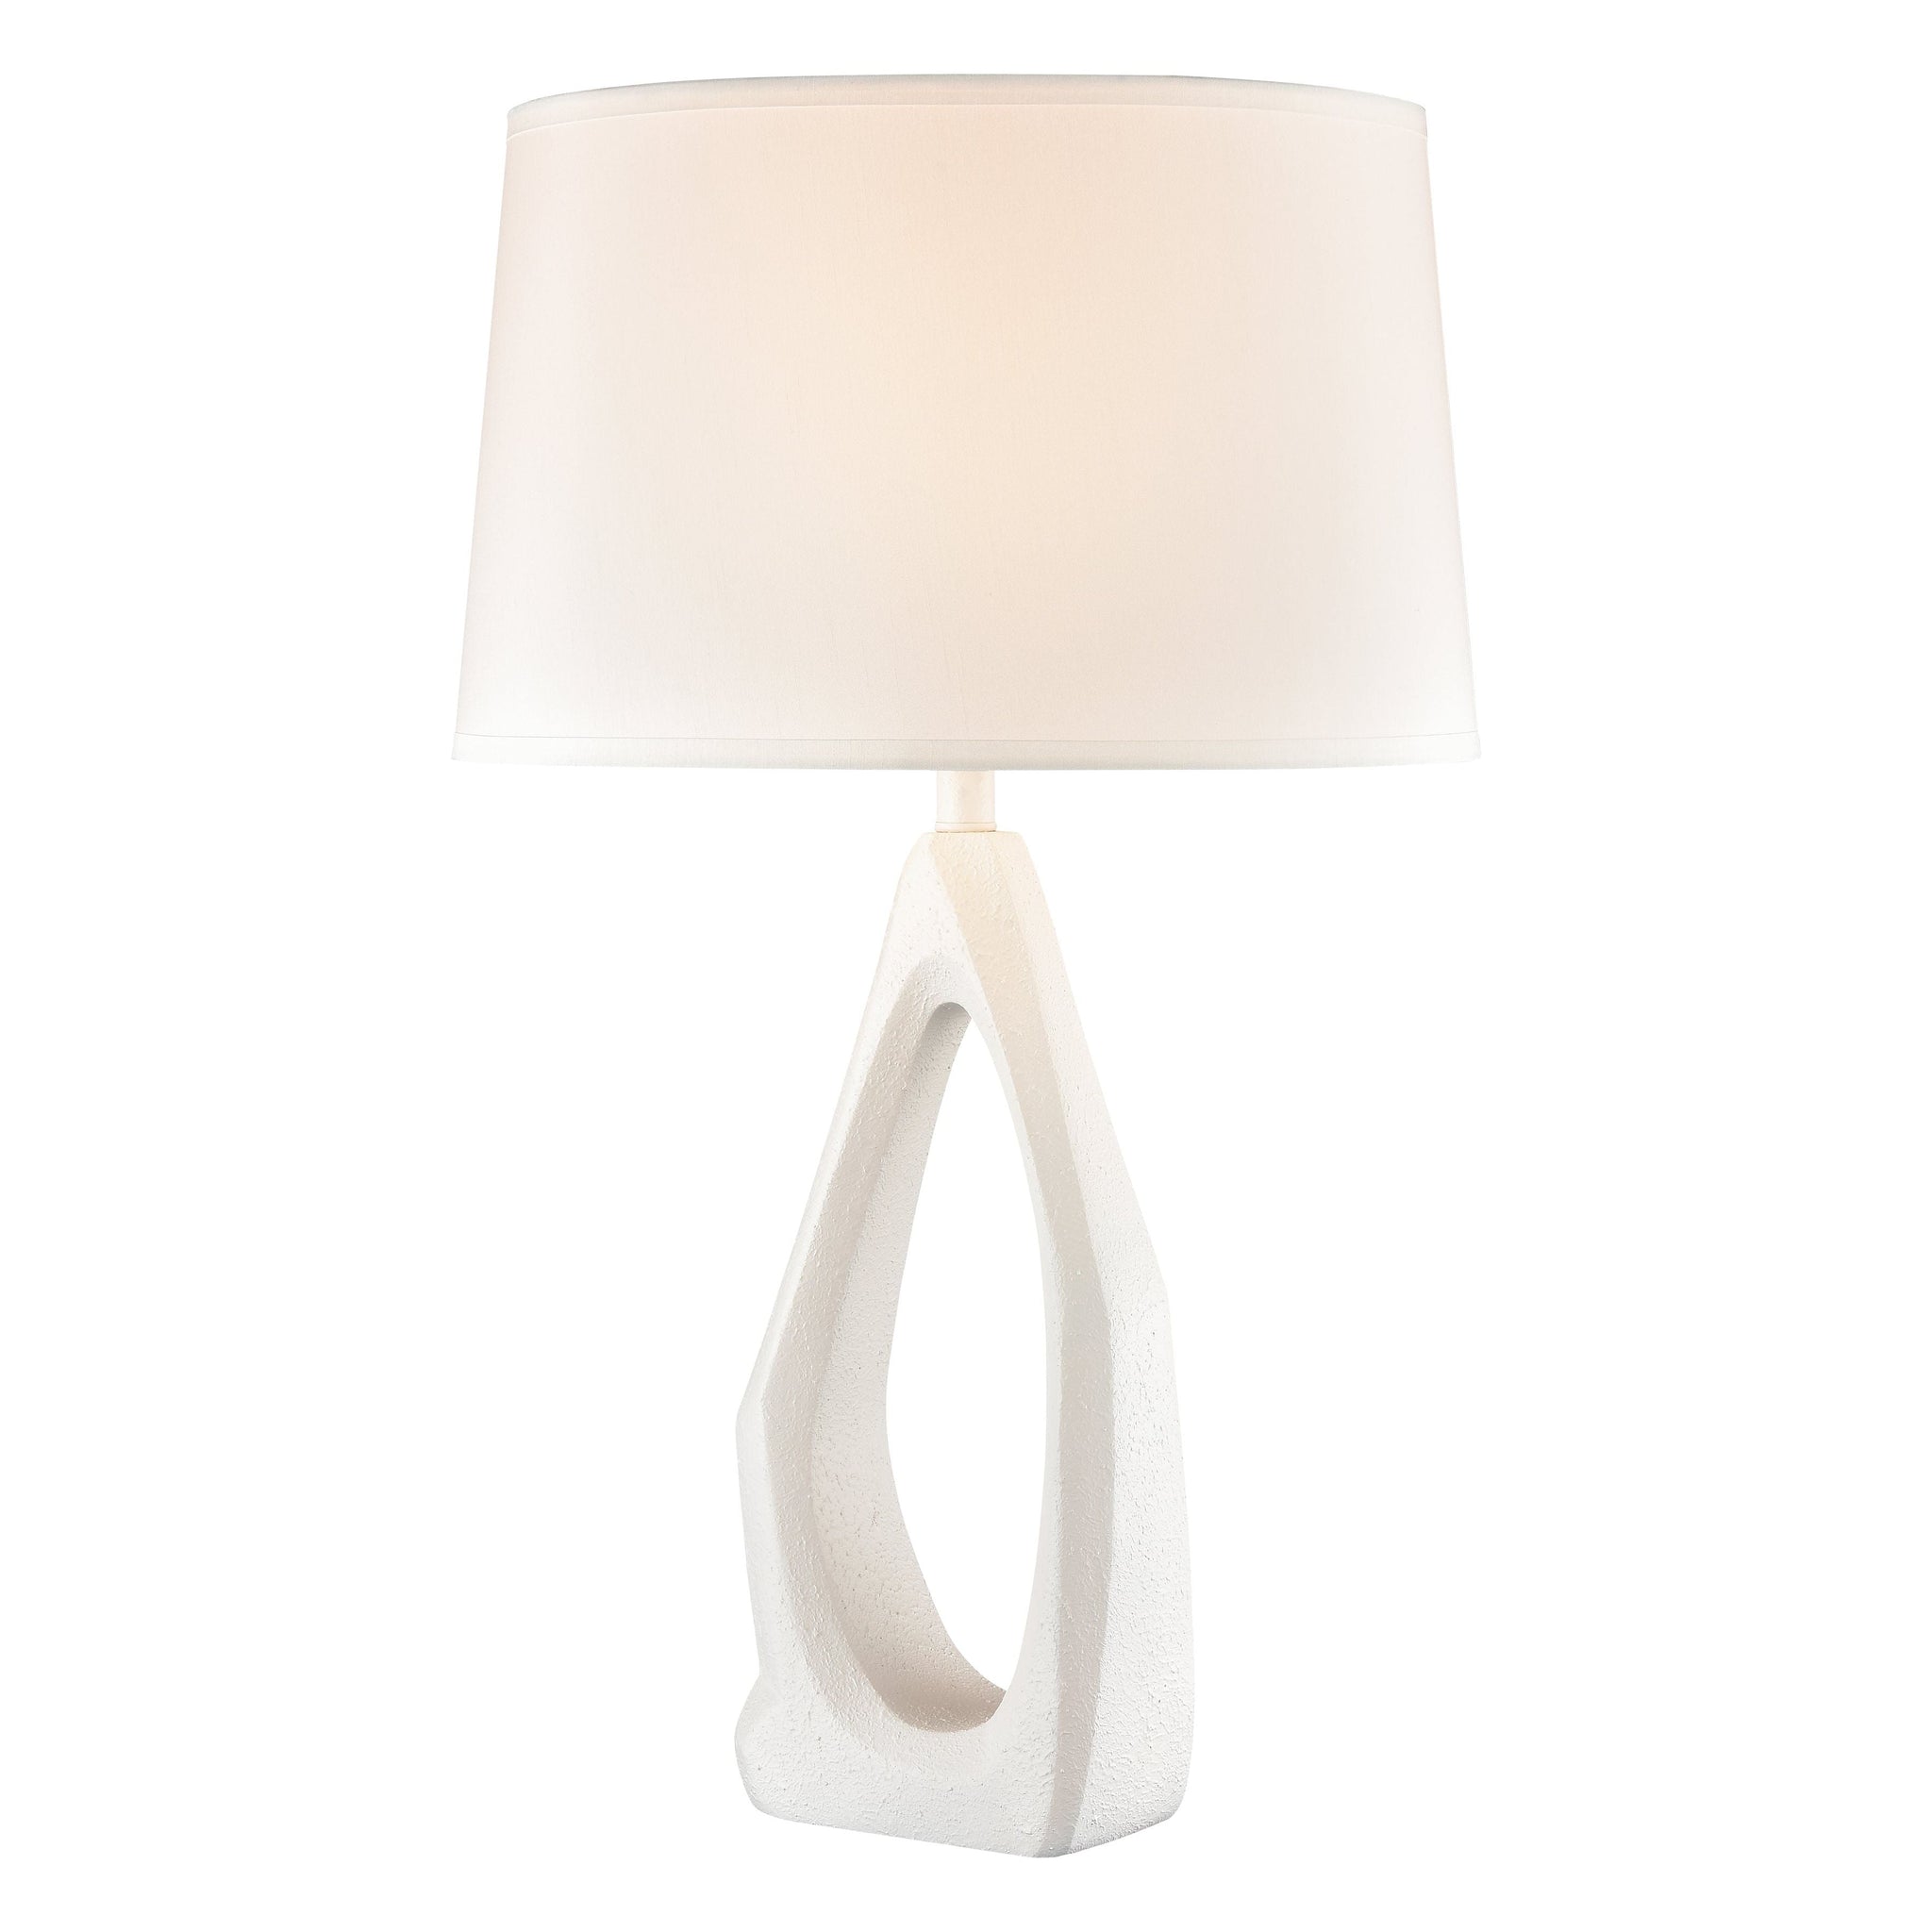 Galeria 31" High 1-Light Table Lamp